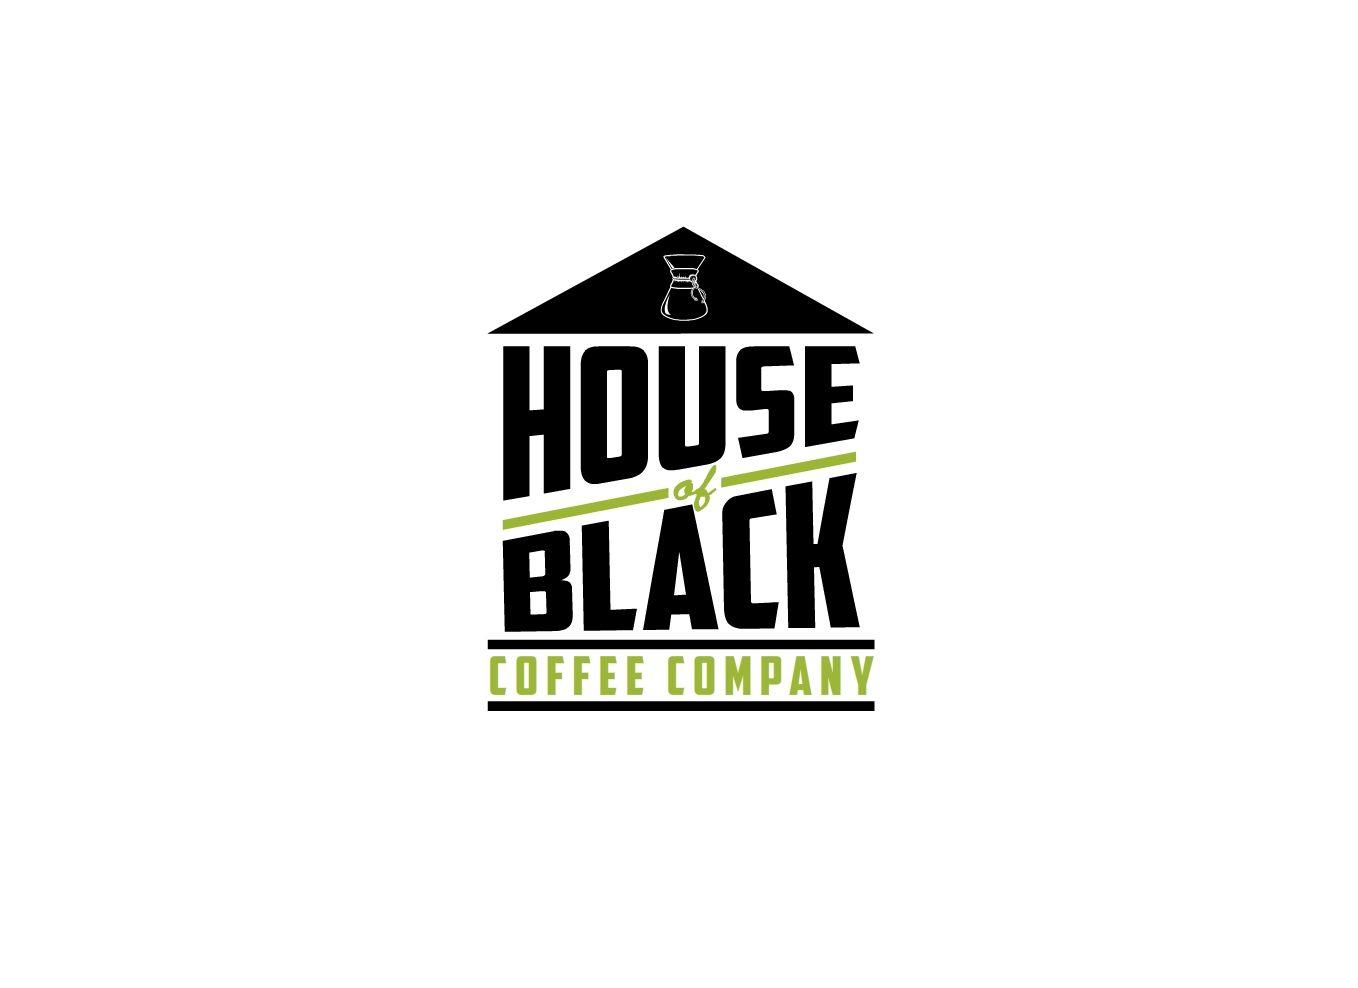 Hob Logo - It Company Logo Design for HOUSE OF BLACK COFFEE COMPANY